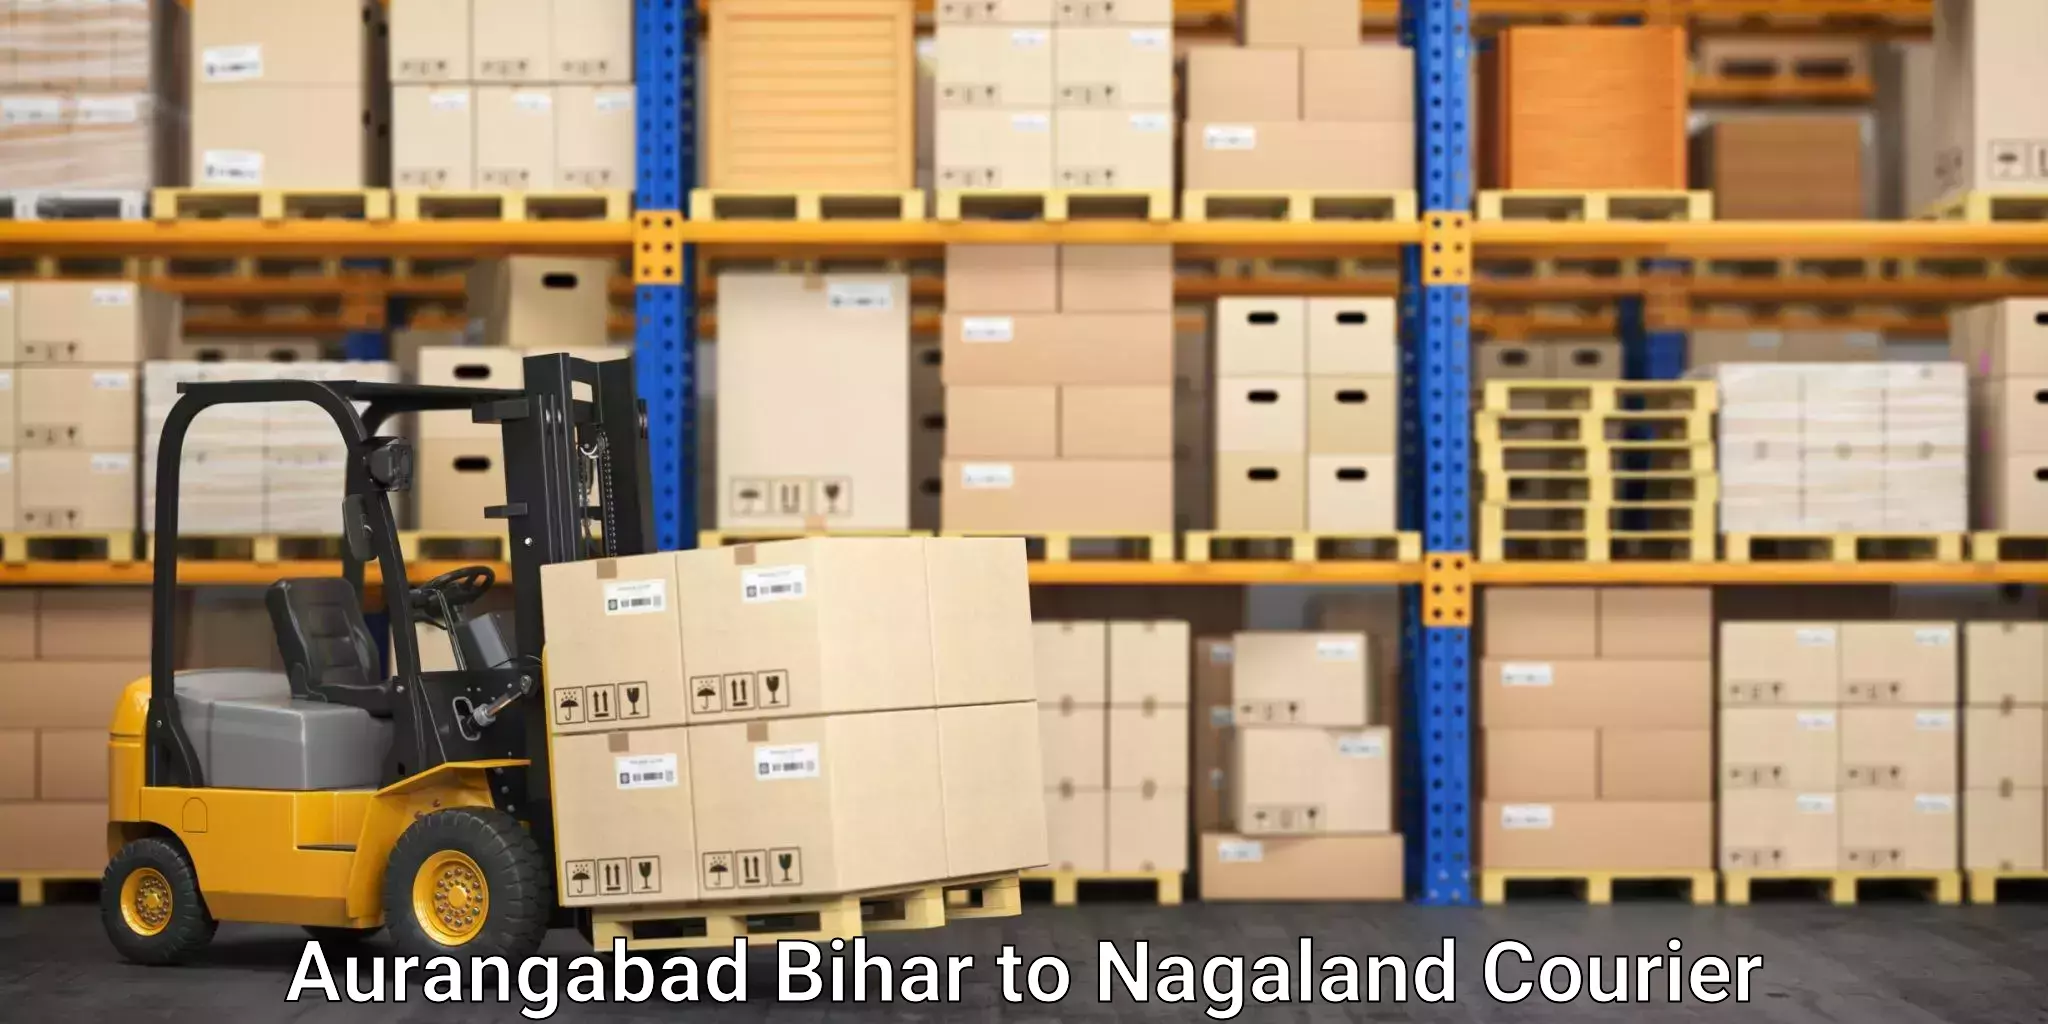 Furniture moving assistance Aurangabad Bihar to Dimapur